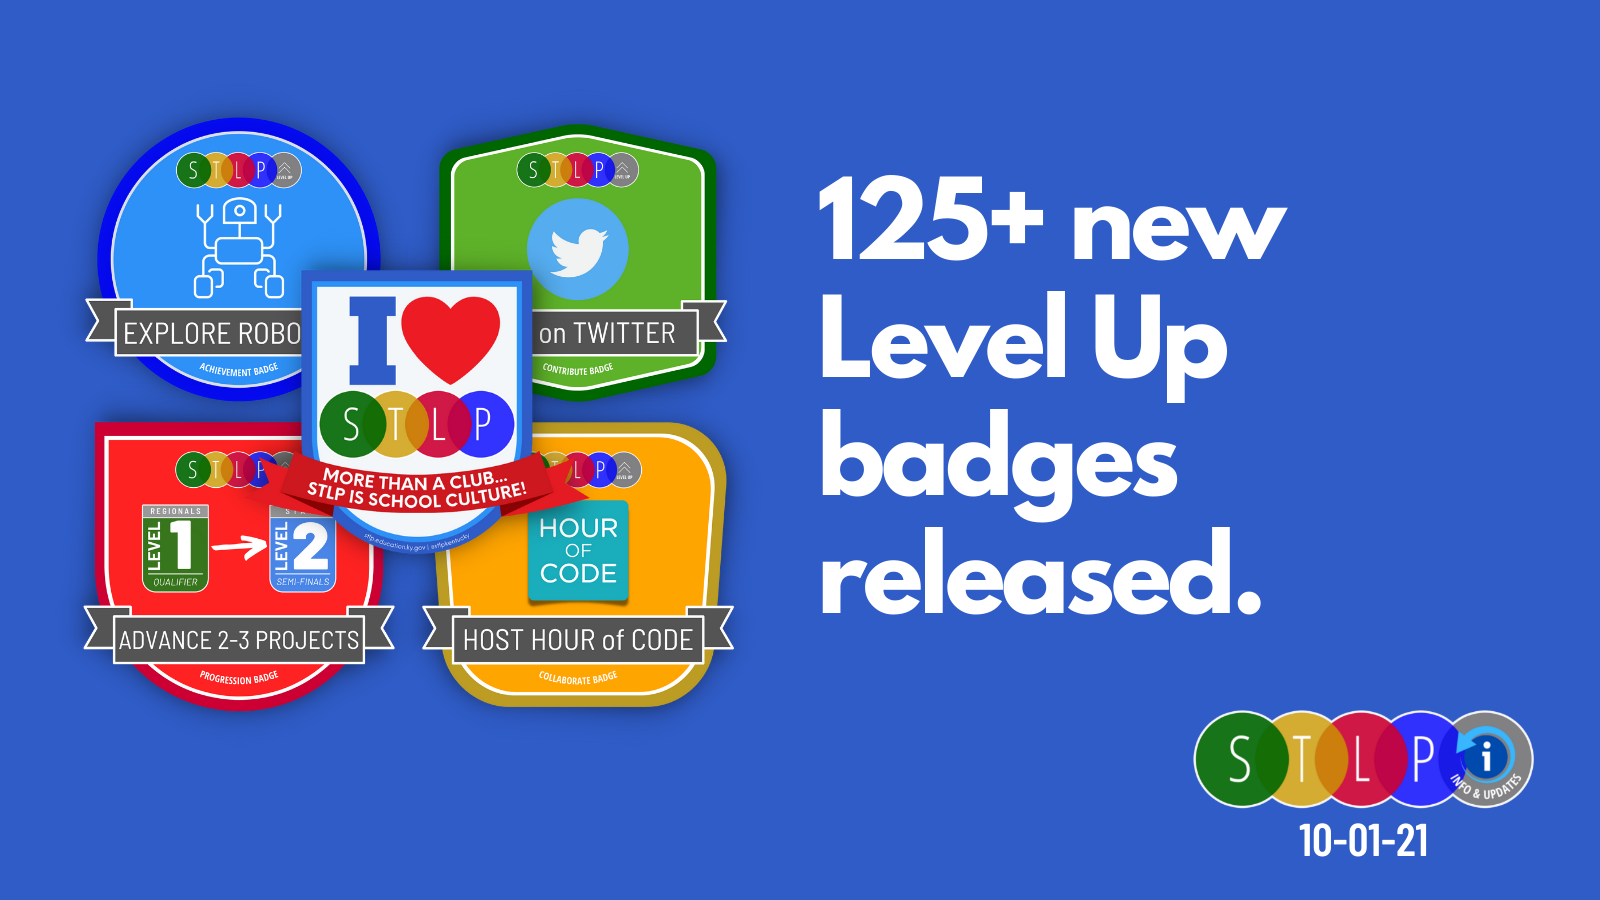 revamped Level Up badges released